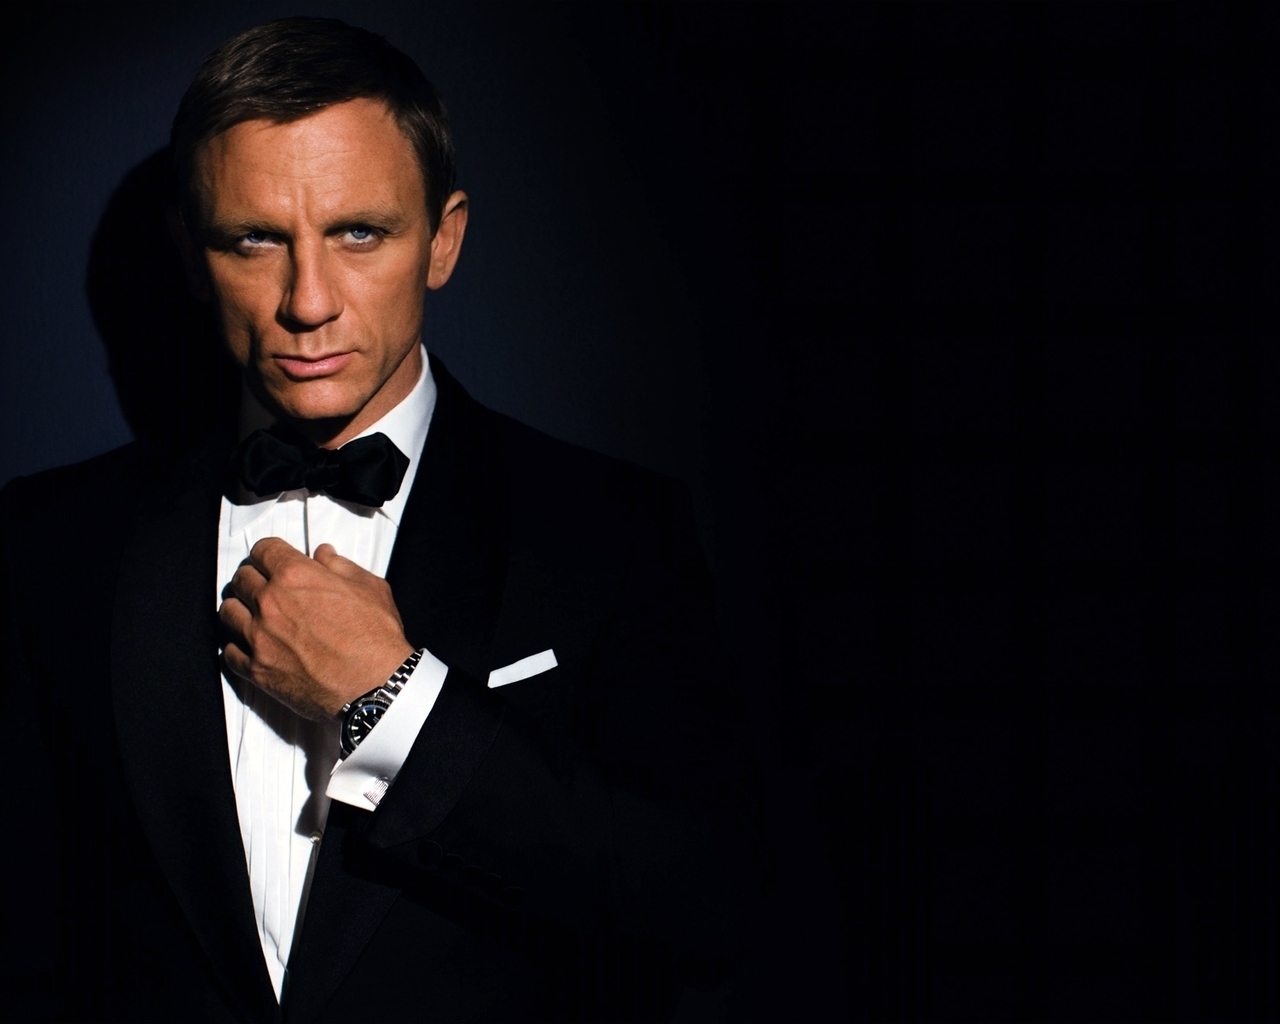 James Bond for 1280 x 1024 resolution